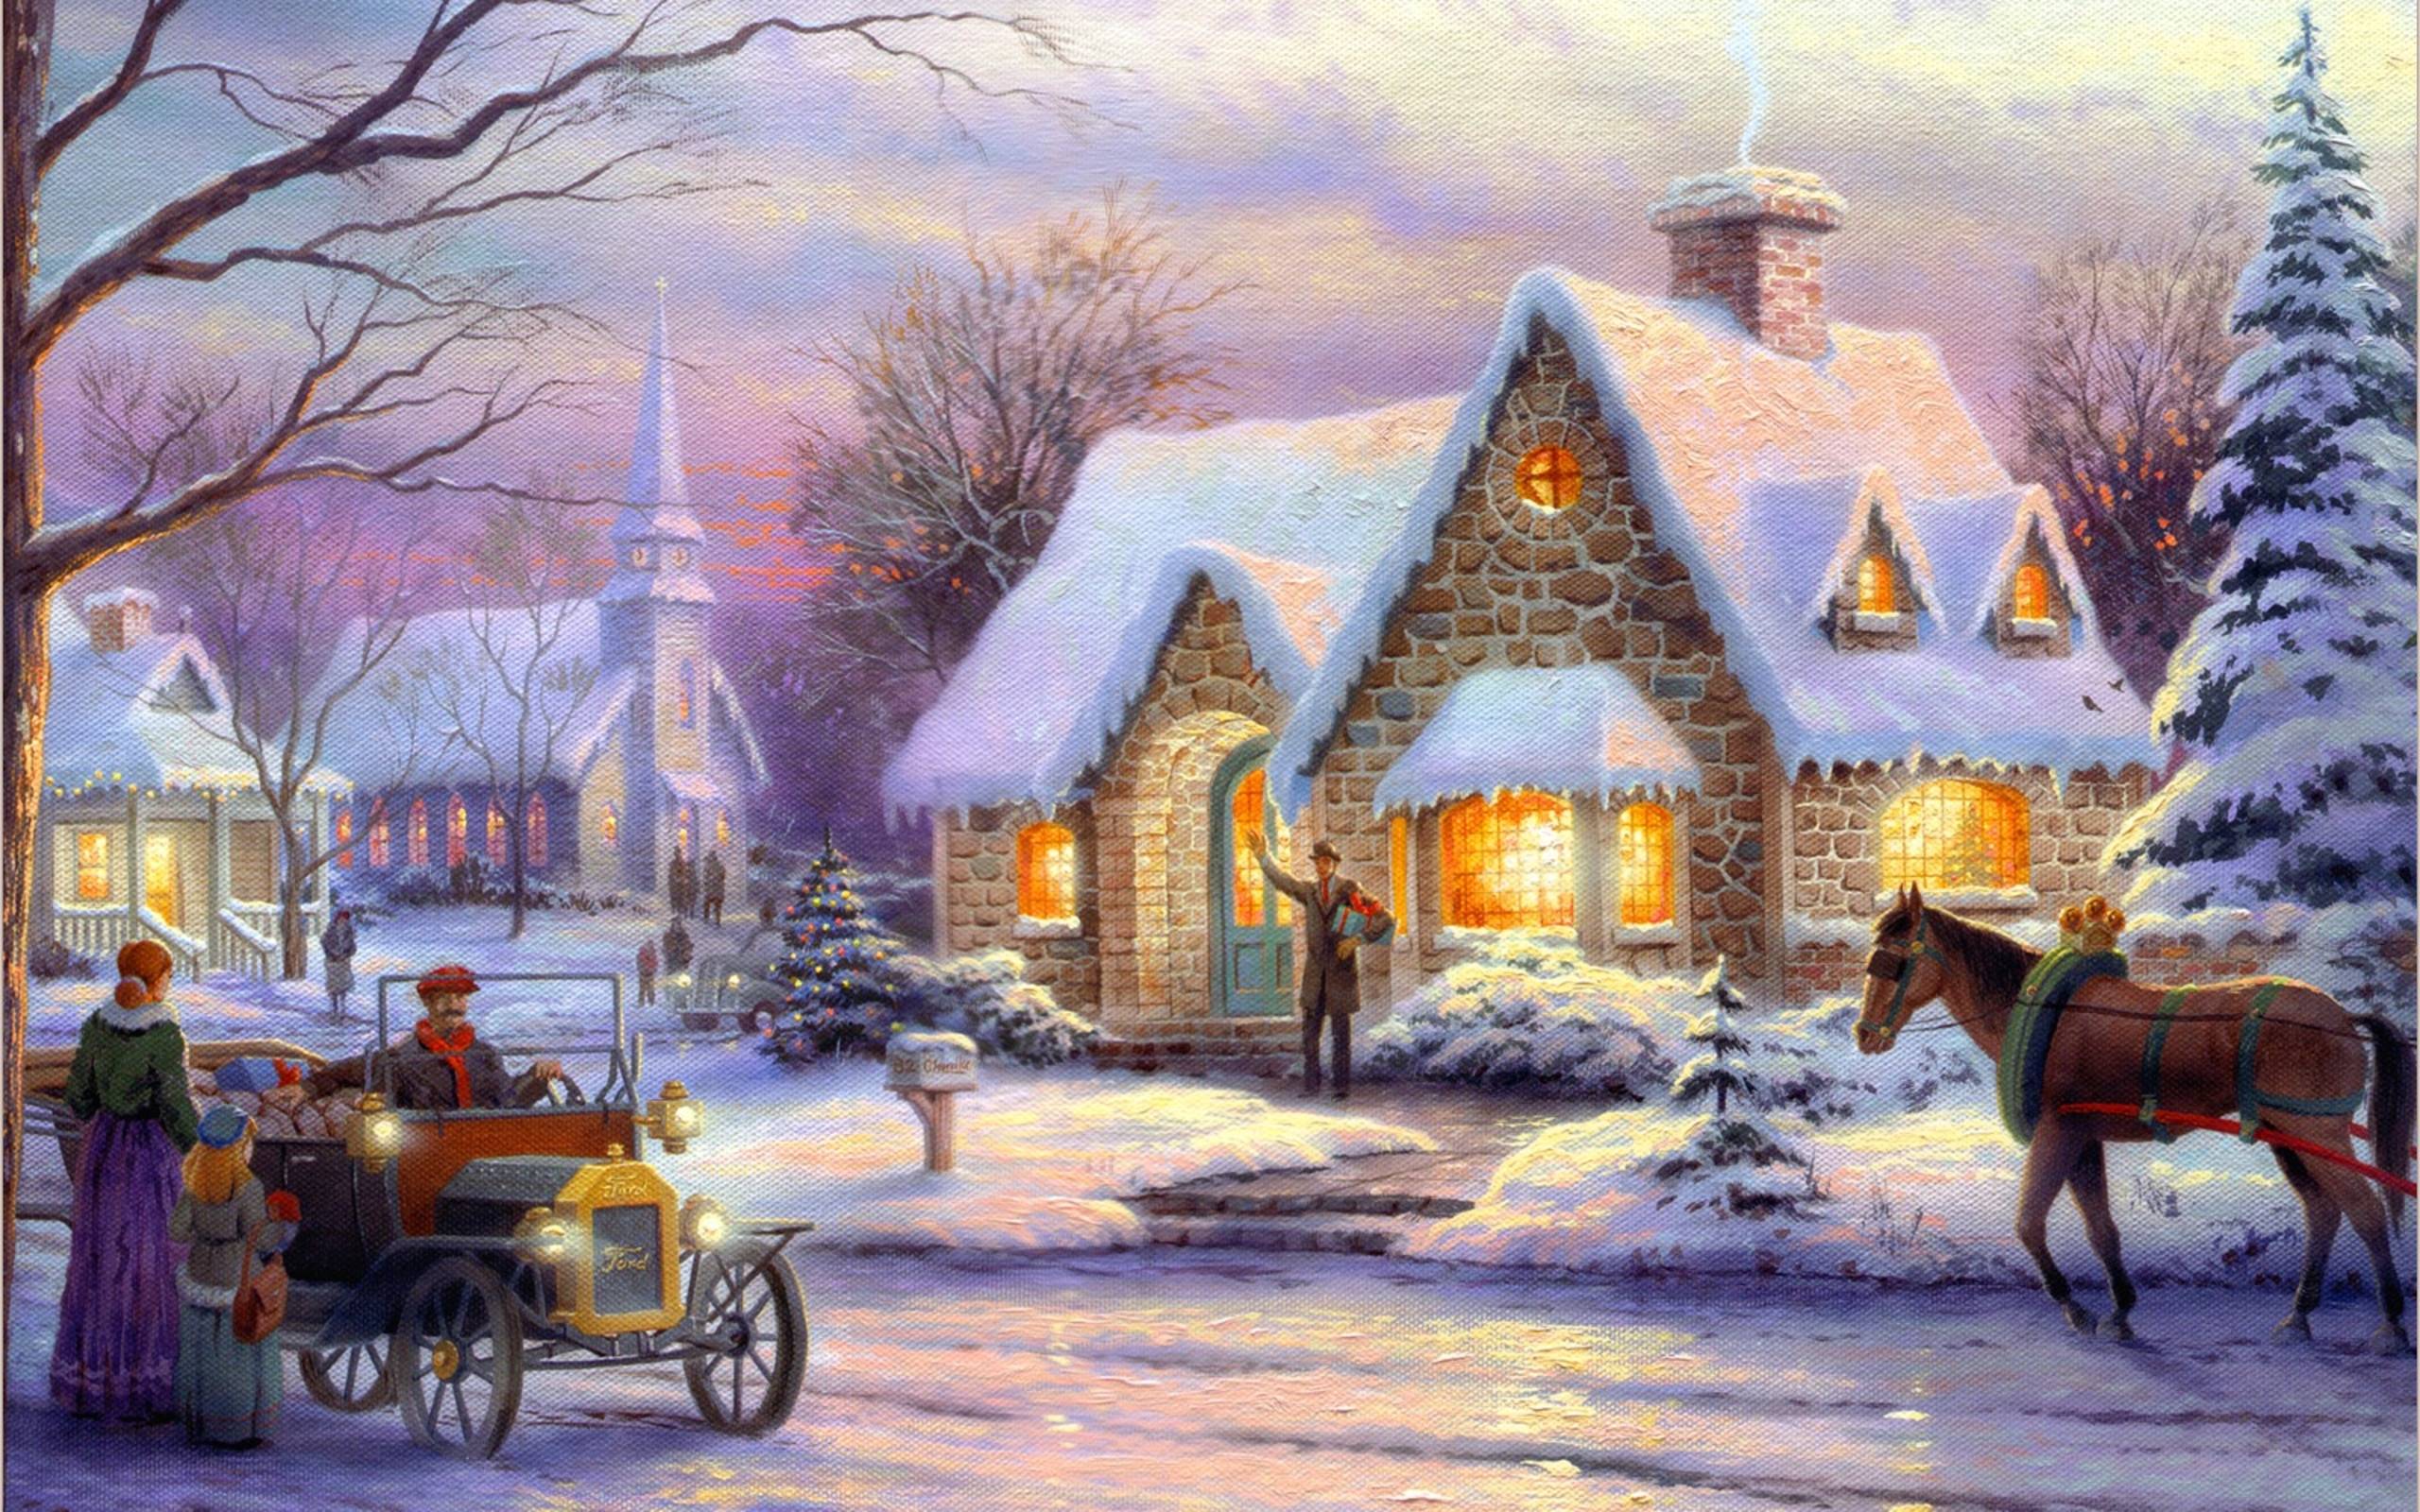 Thomas Kinkade Wallpaper, Memories of Christmas, art, painting